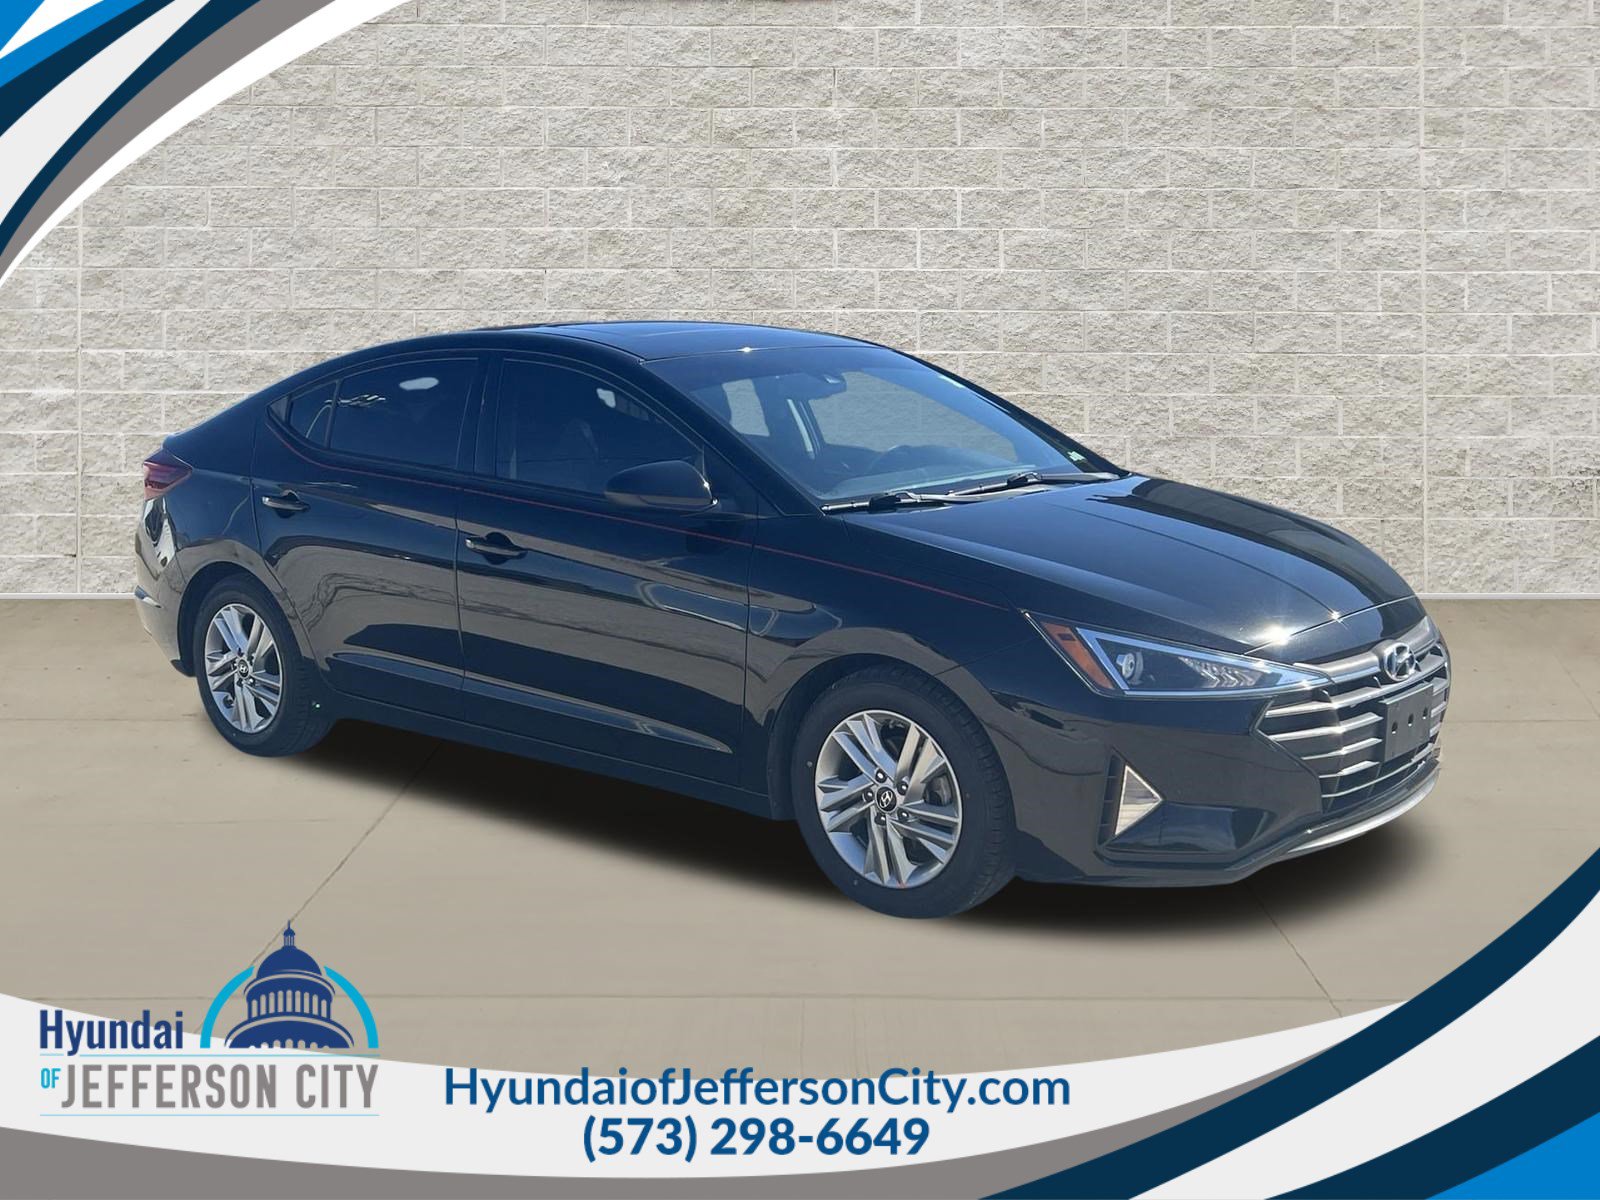 2019 Hyundai Elantra Jefferson City MO